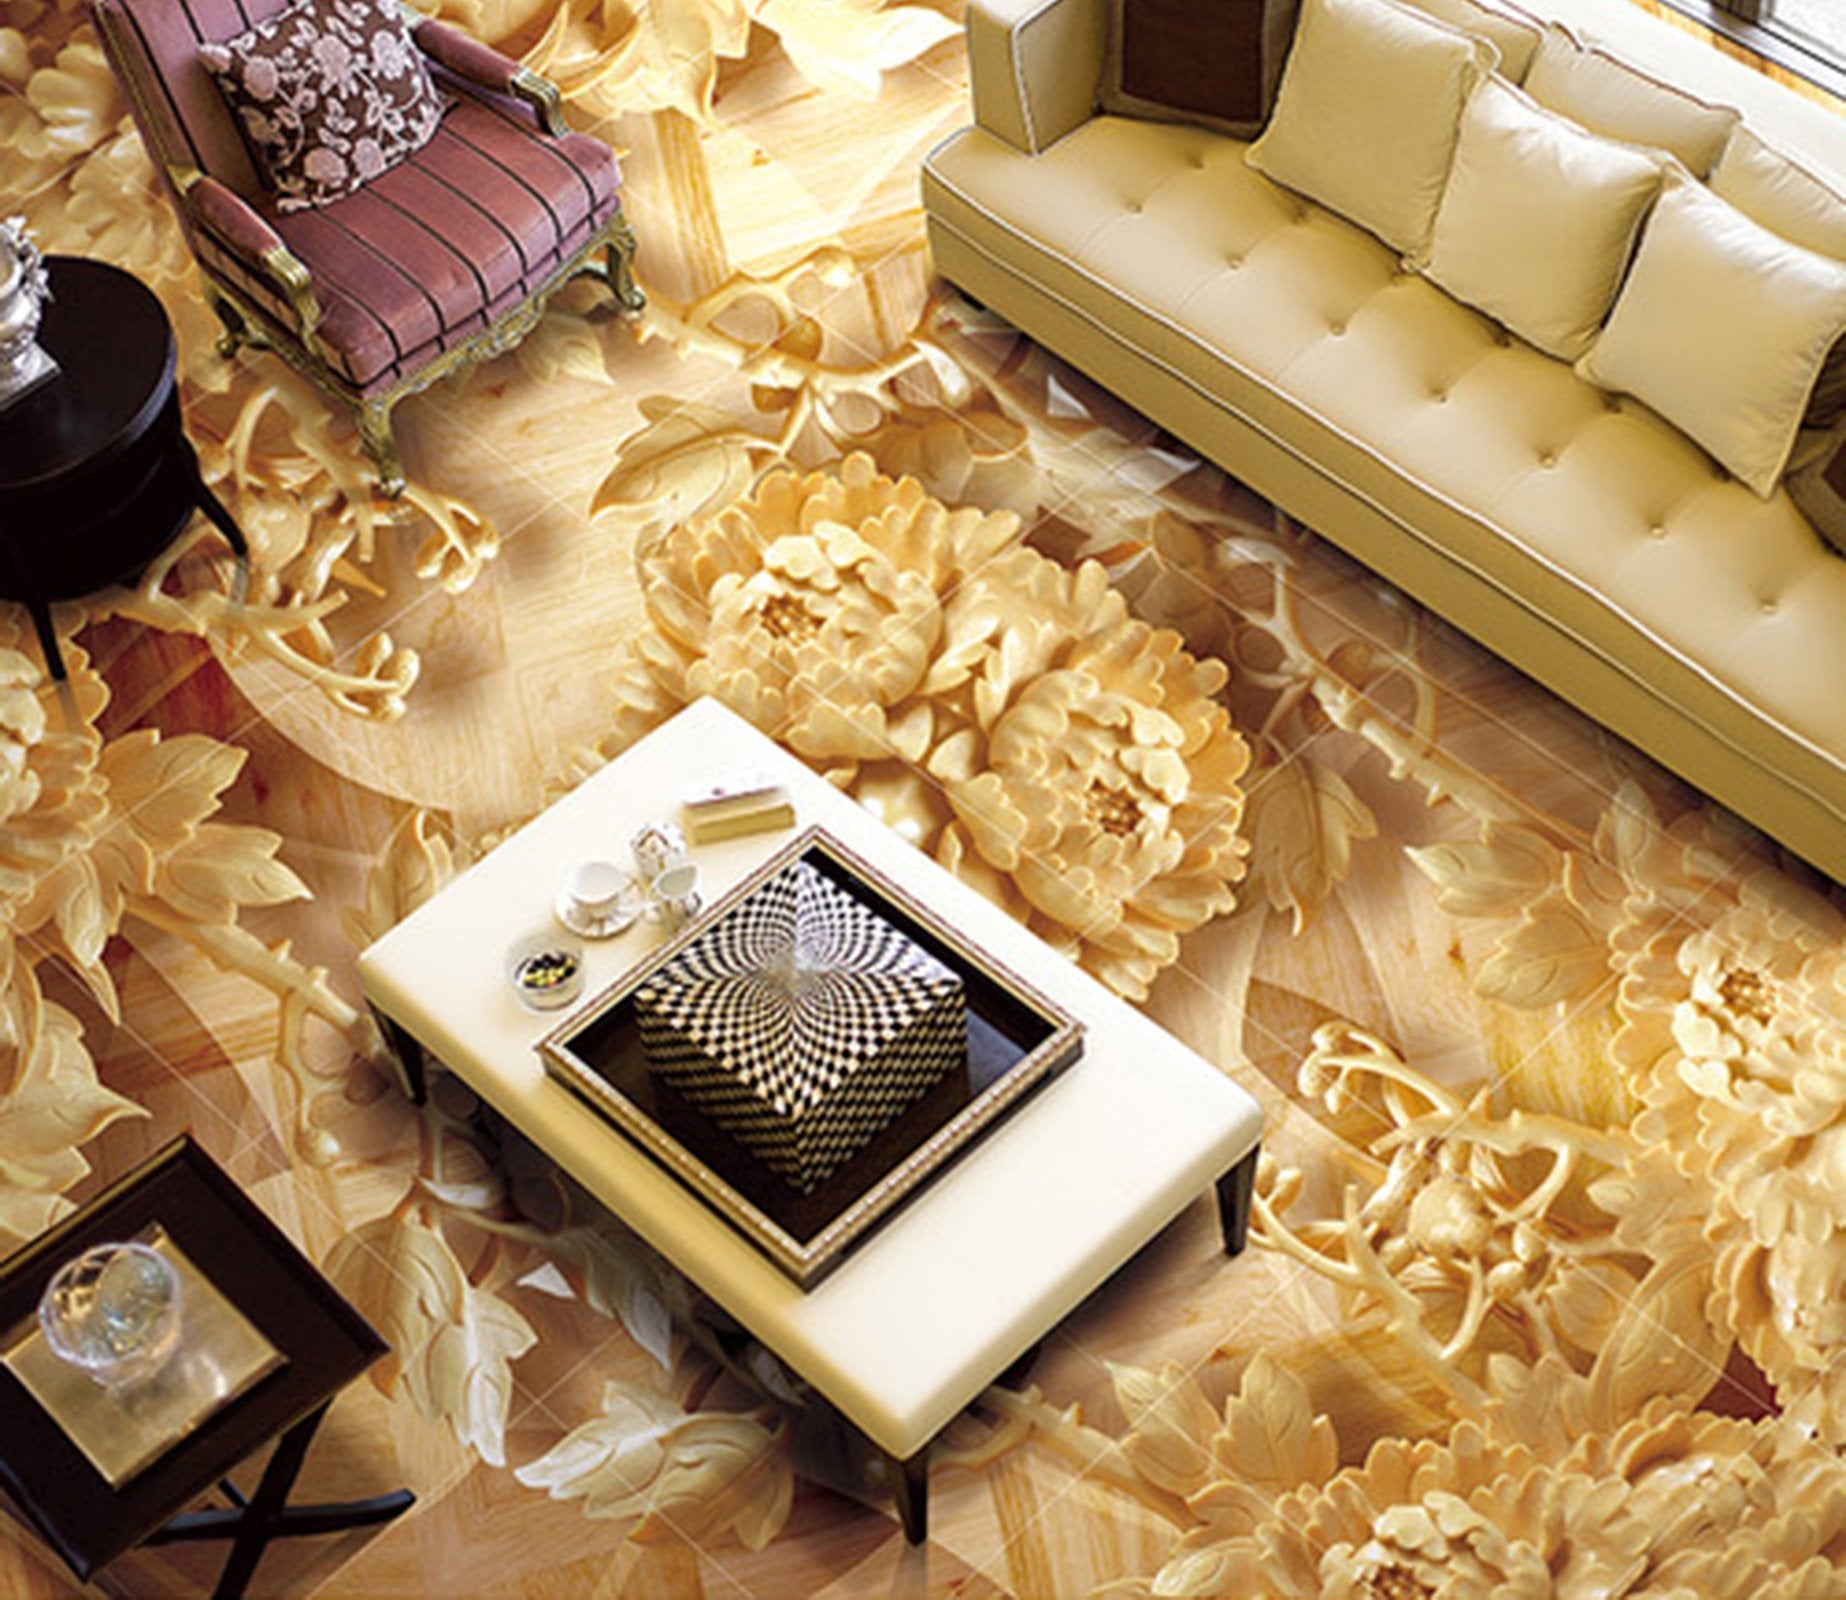 3D Golden Marble Lace WG271 Floor Mural Wallpaper AJ Wallpaper 2 